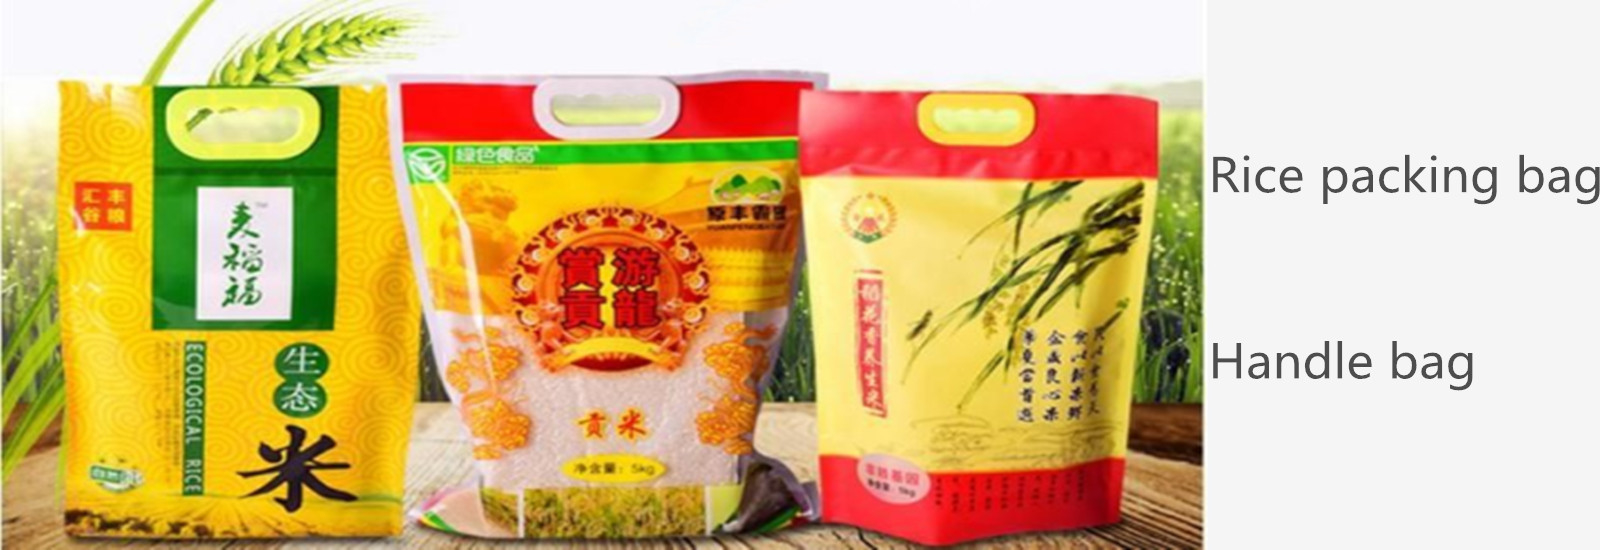 Reis-Verpackungs-Taschen